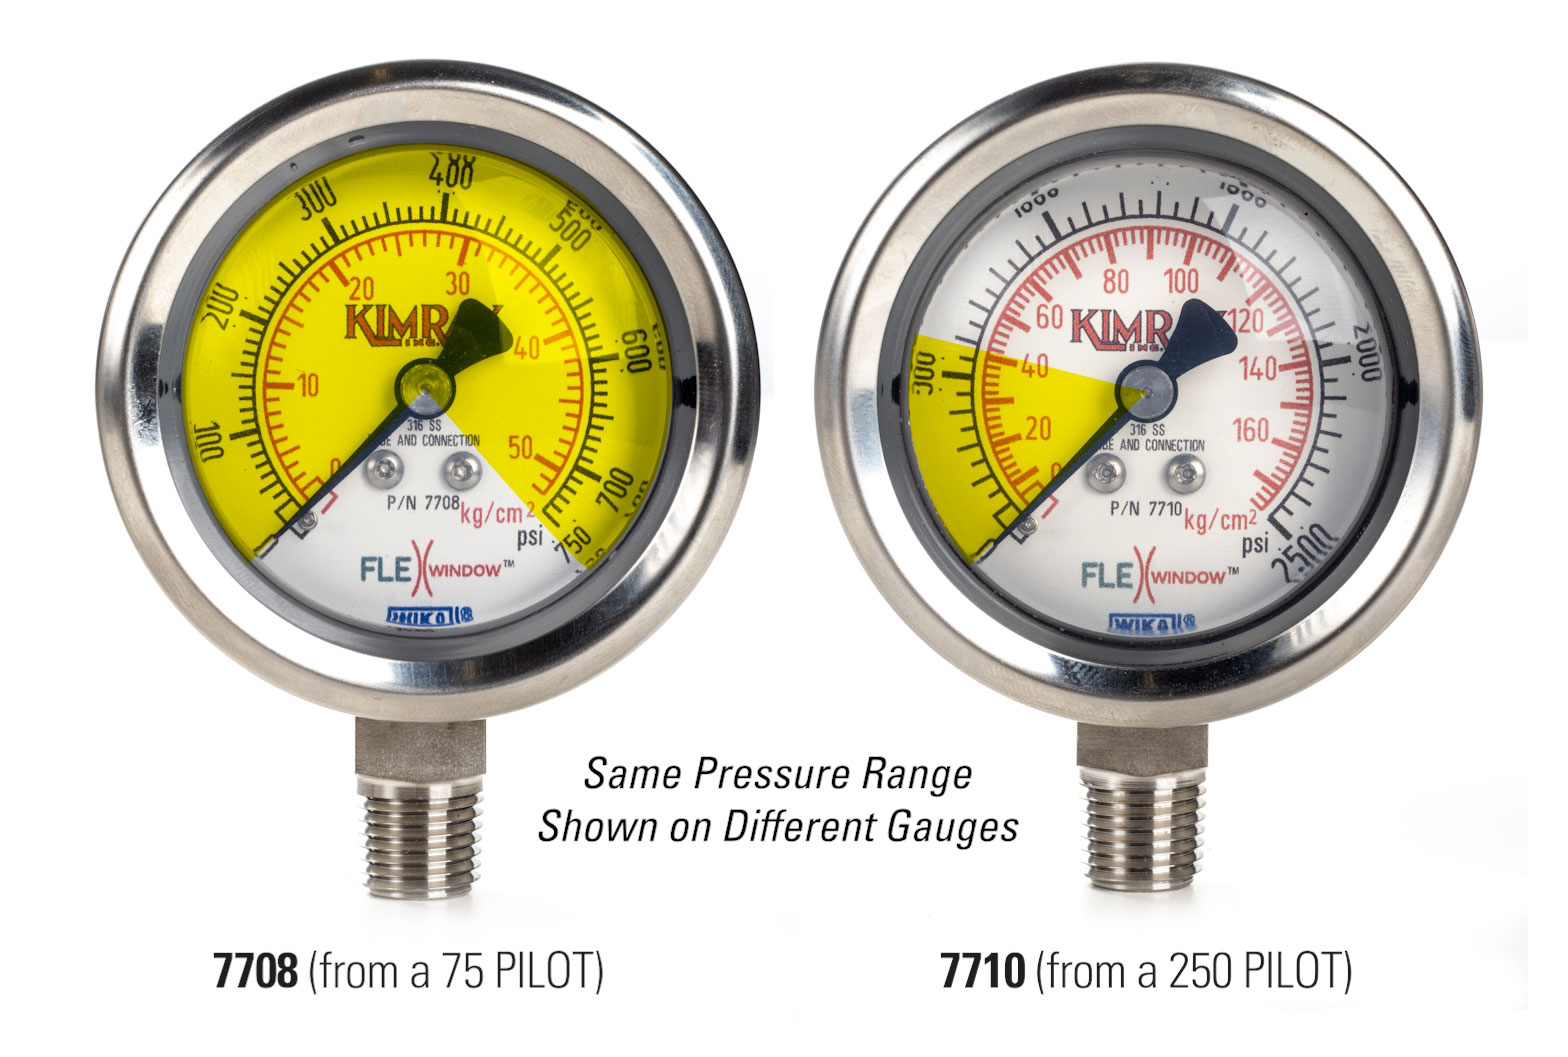 Pressure Ranges on Gauges